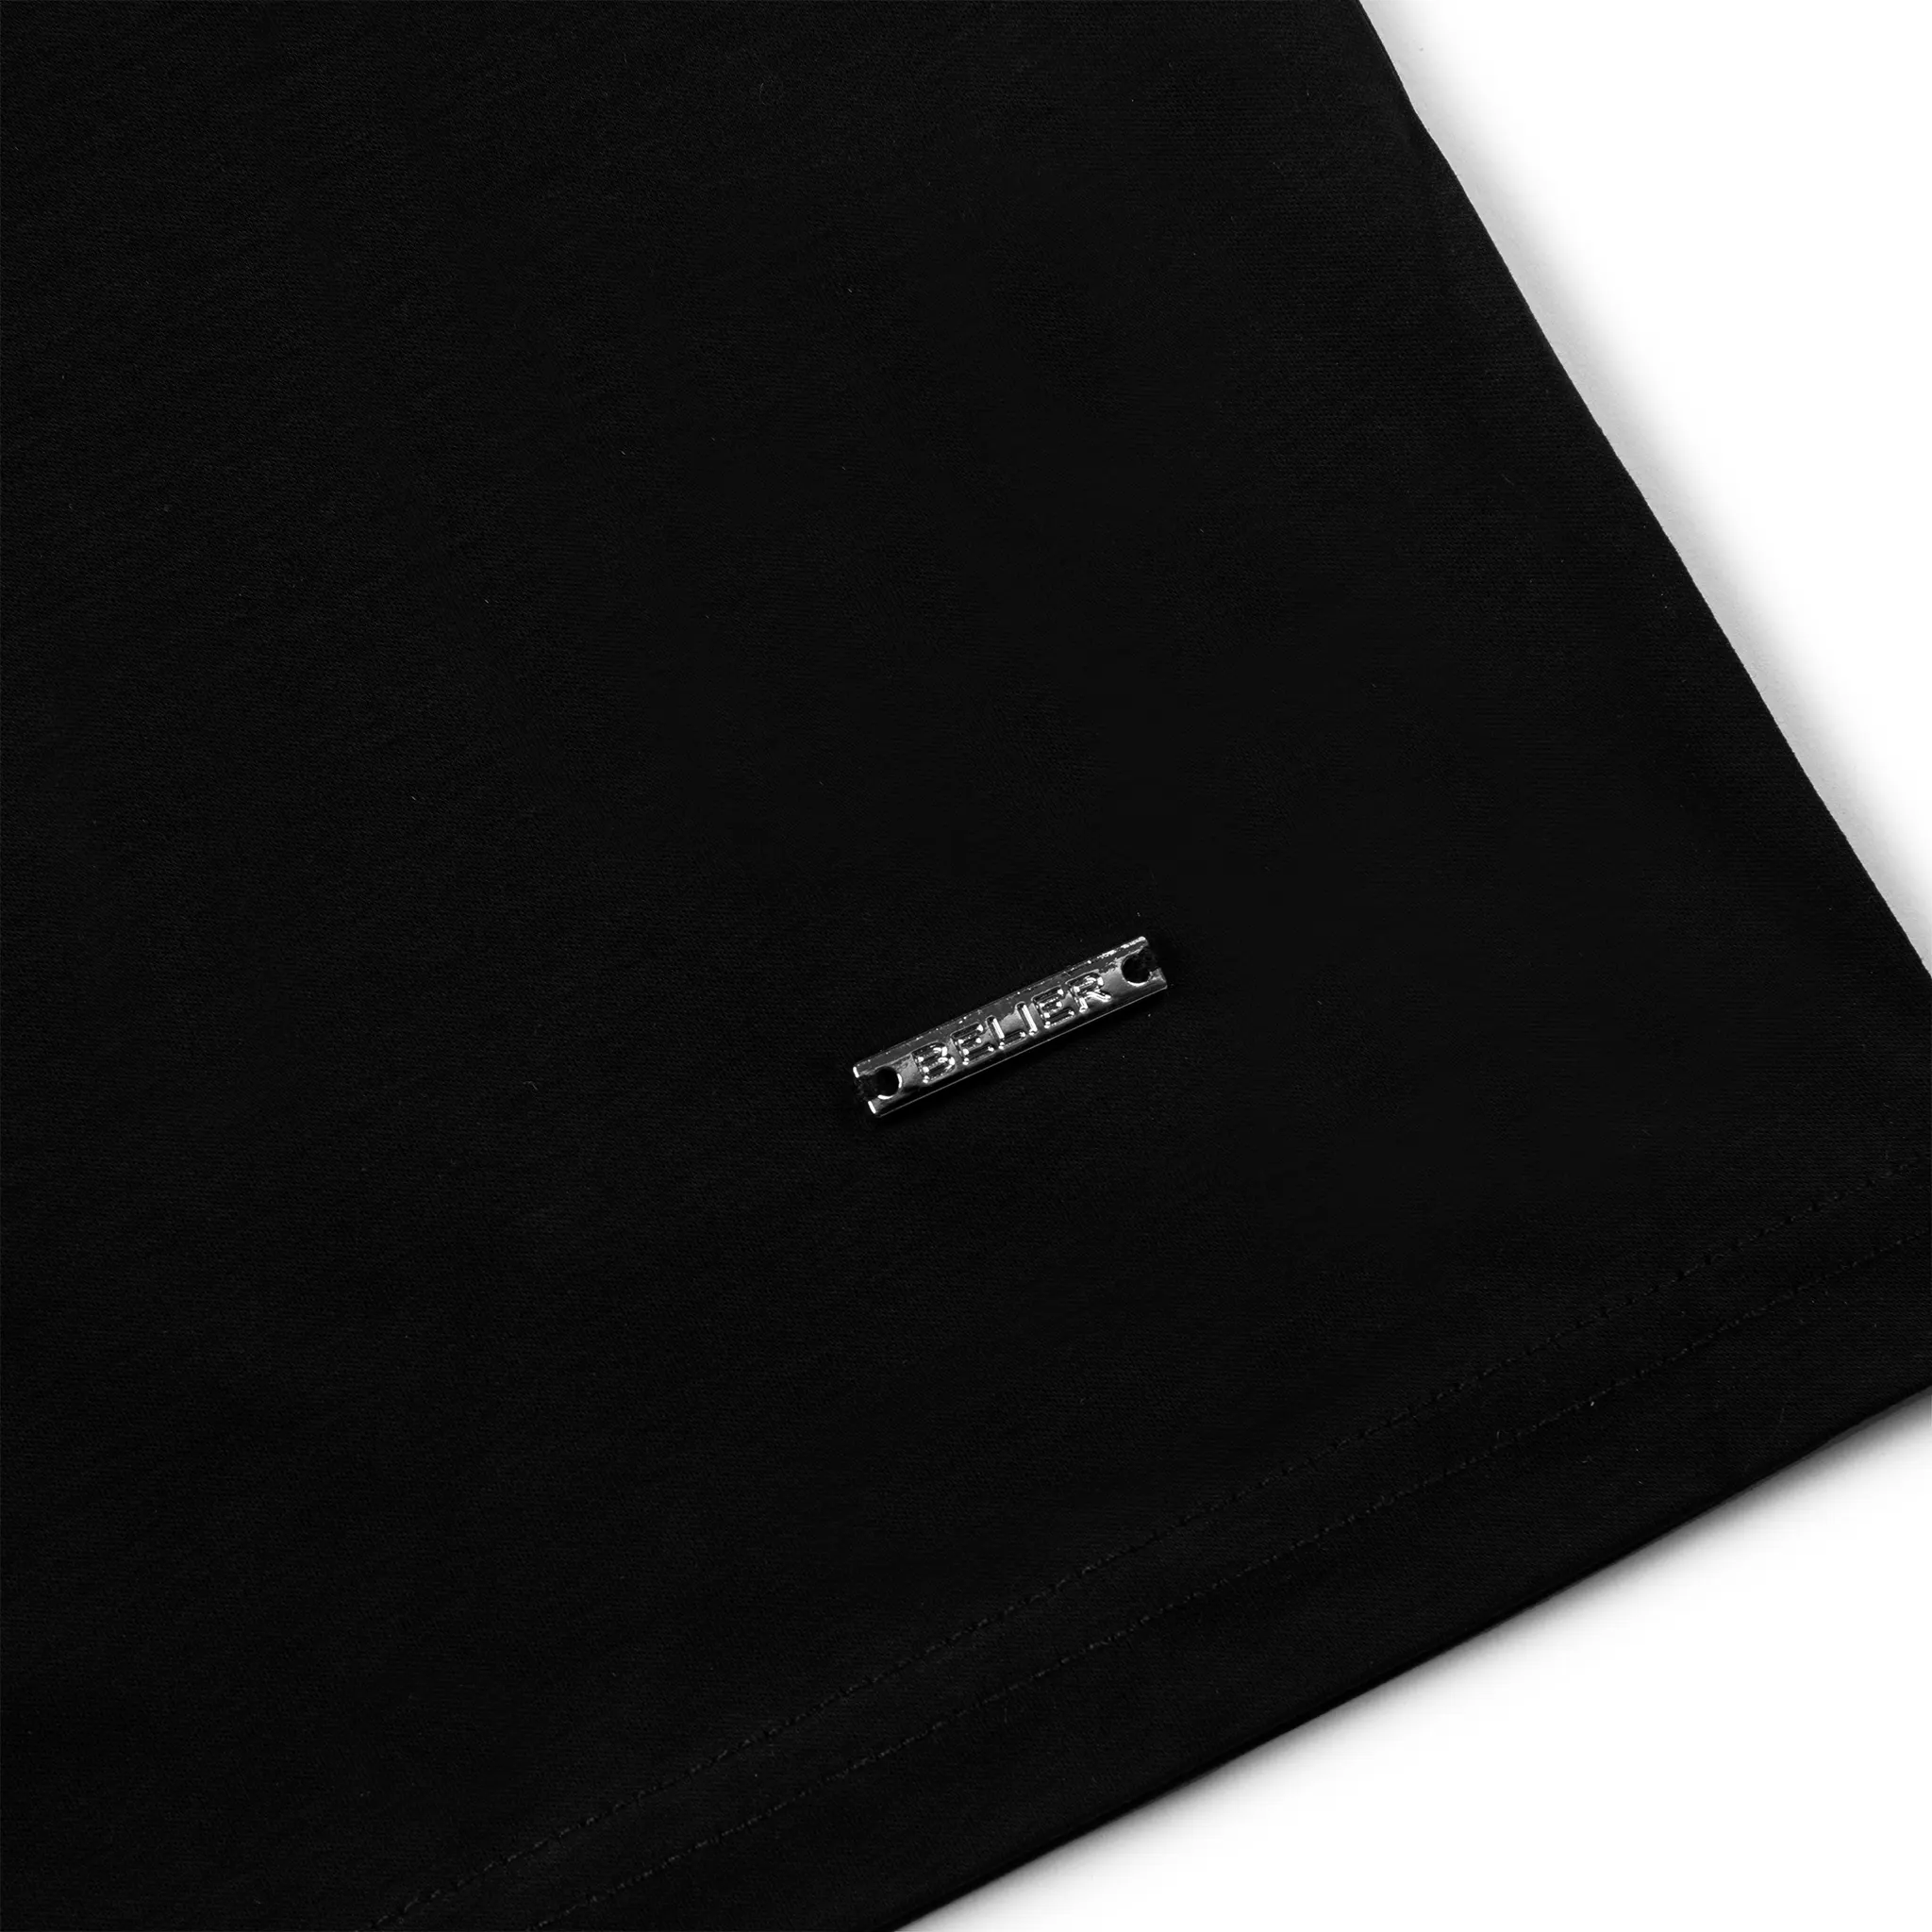 Detail view of Belier Illusion Print Black Monochrome Pocket T Shirt BM-169